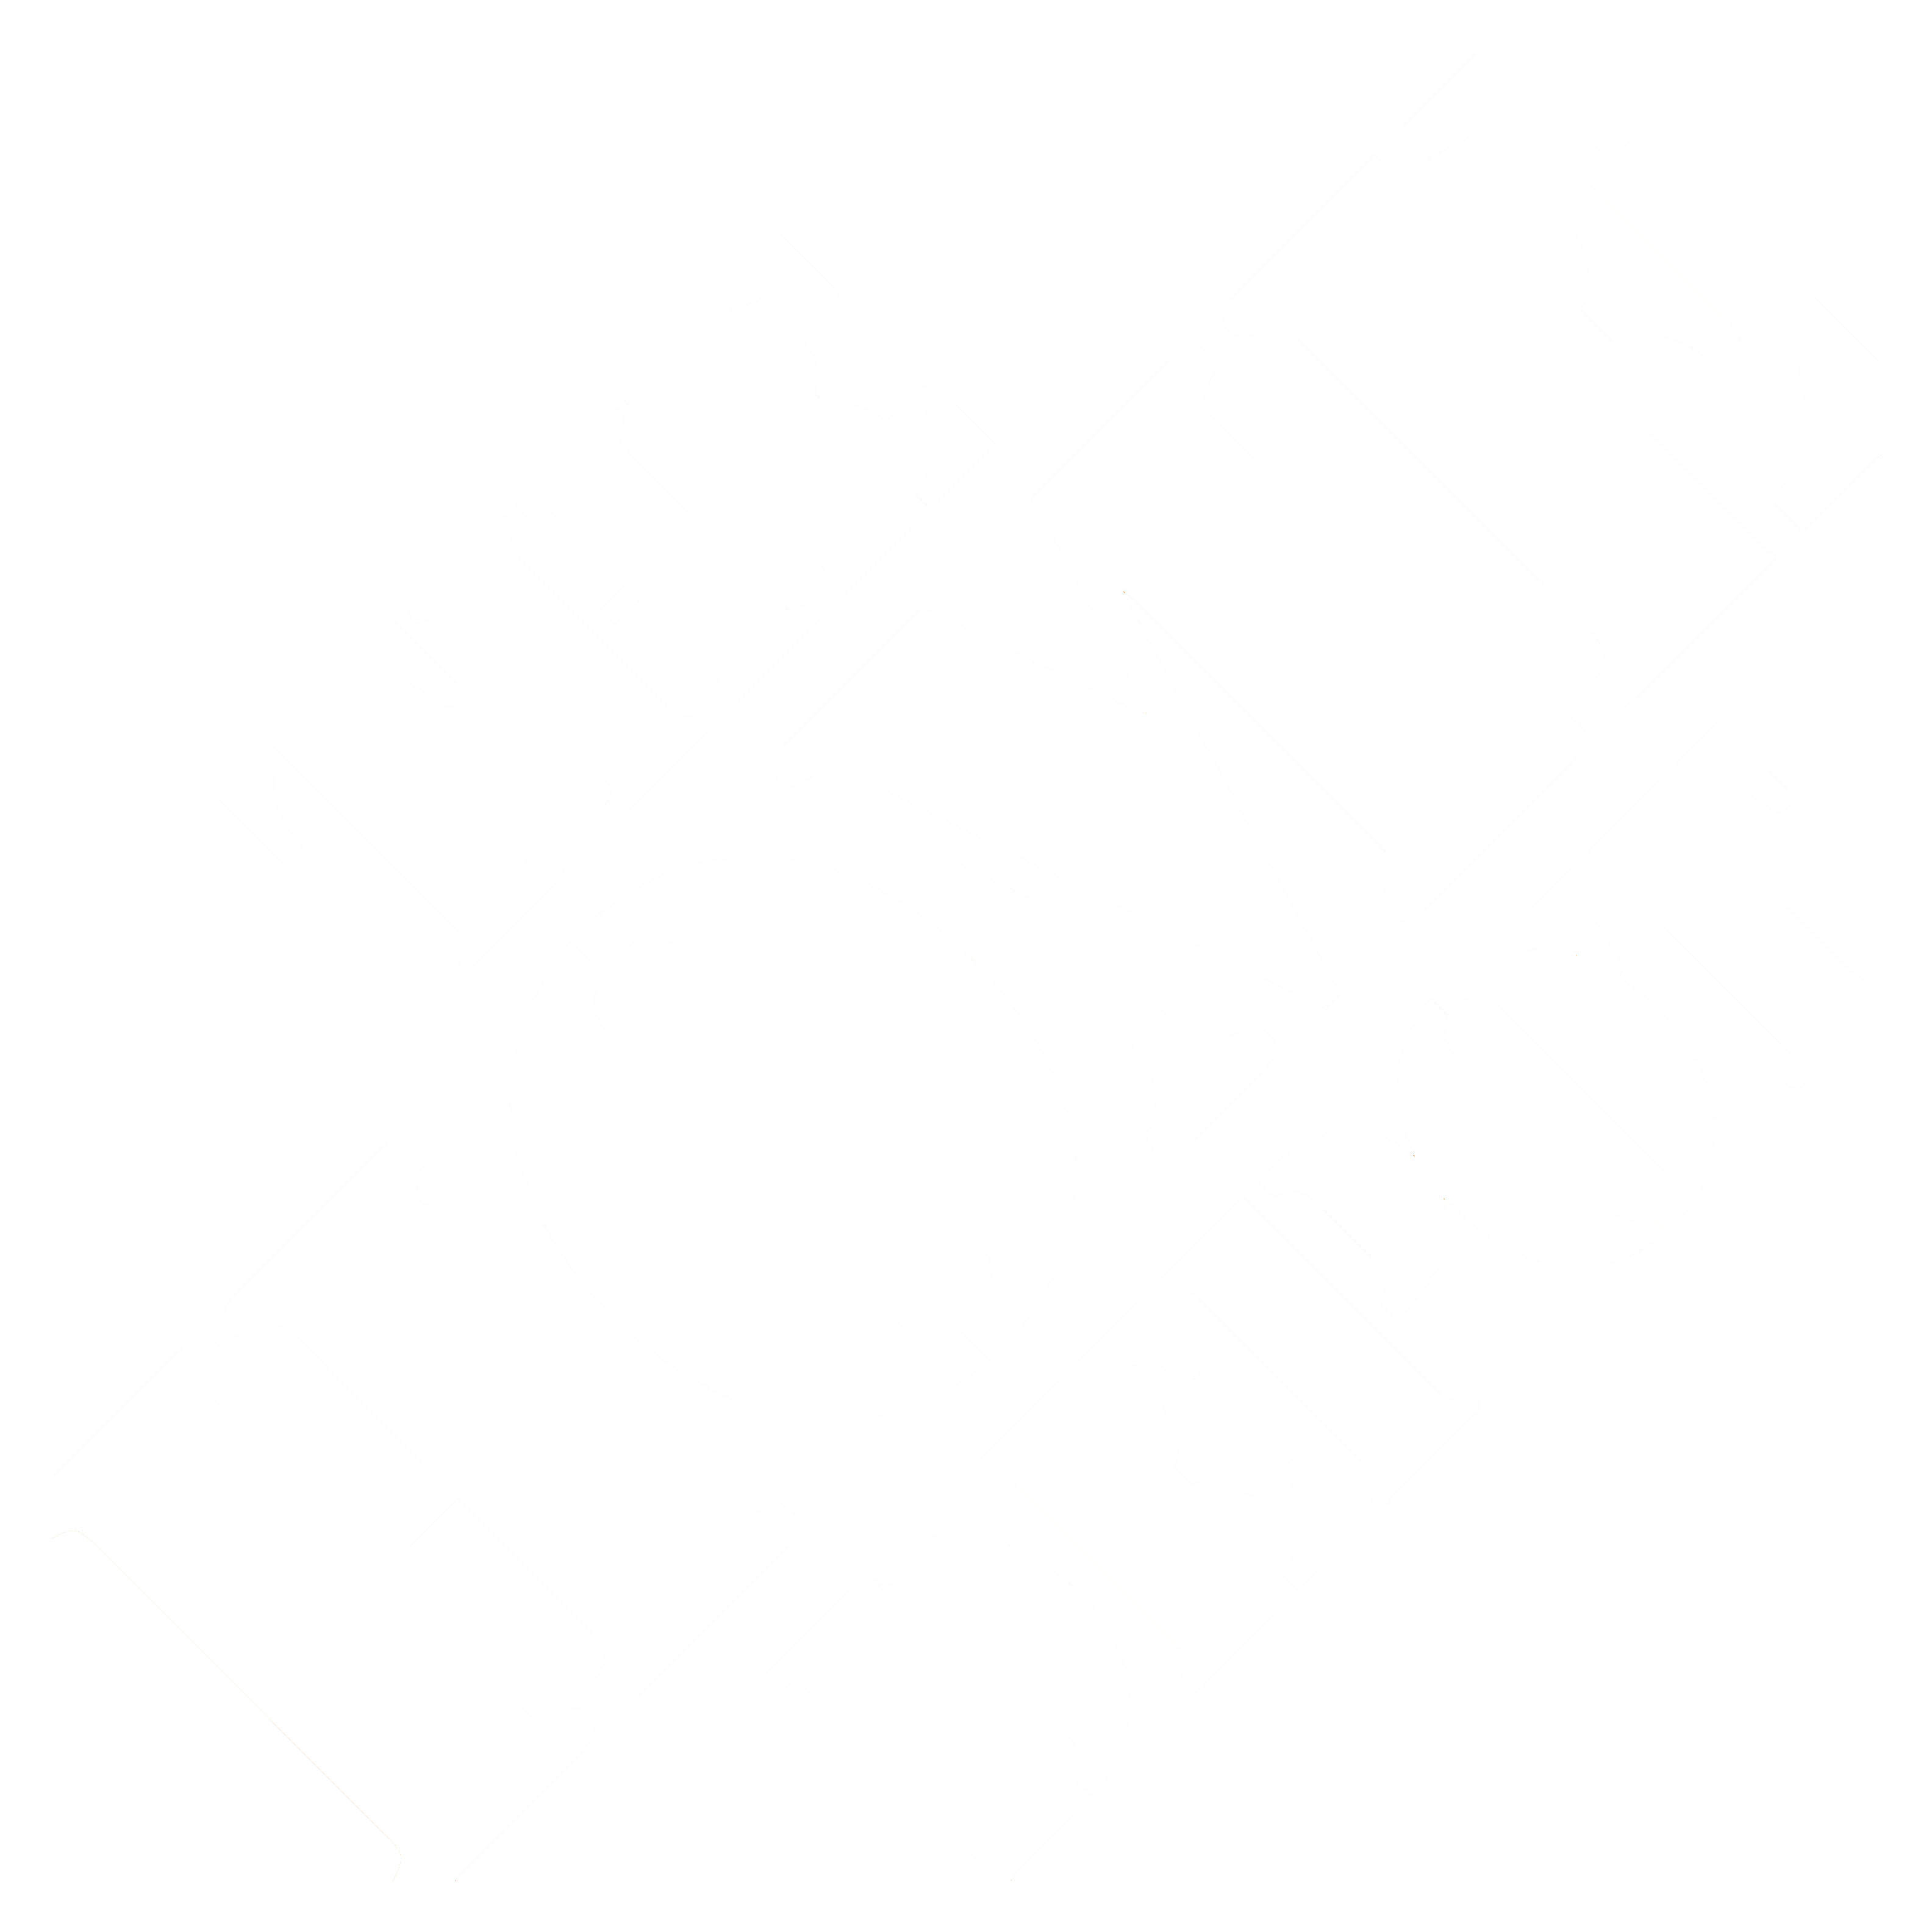 Home Depot Logo - HomeDepot White Logo PNG Image. Free transparent CC0 PNG